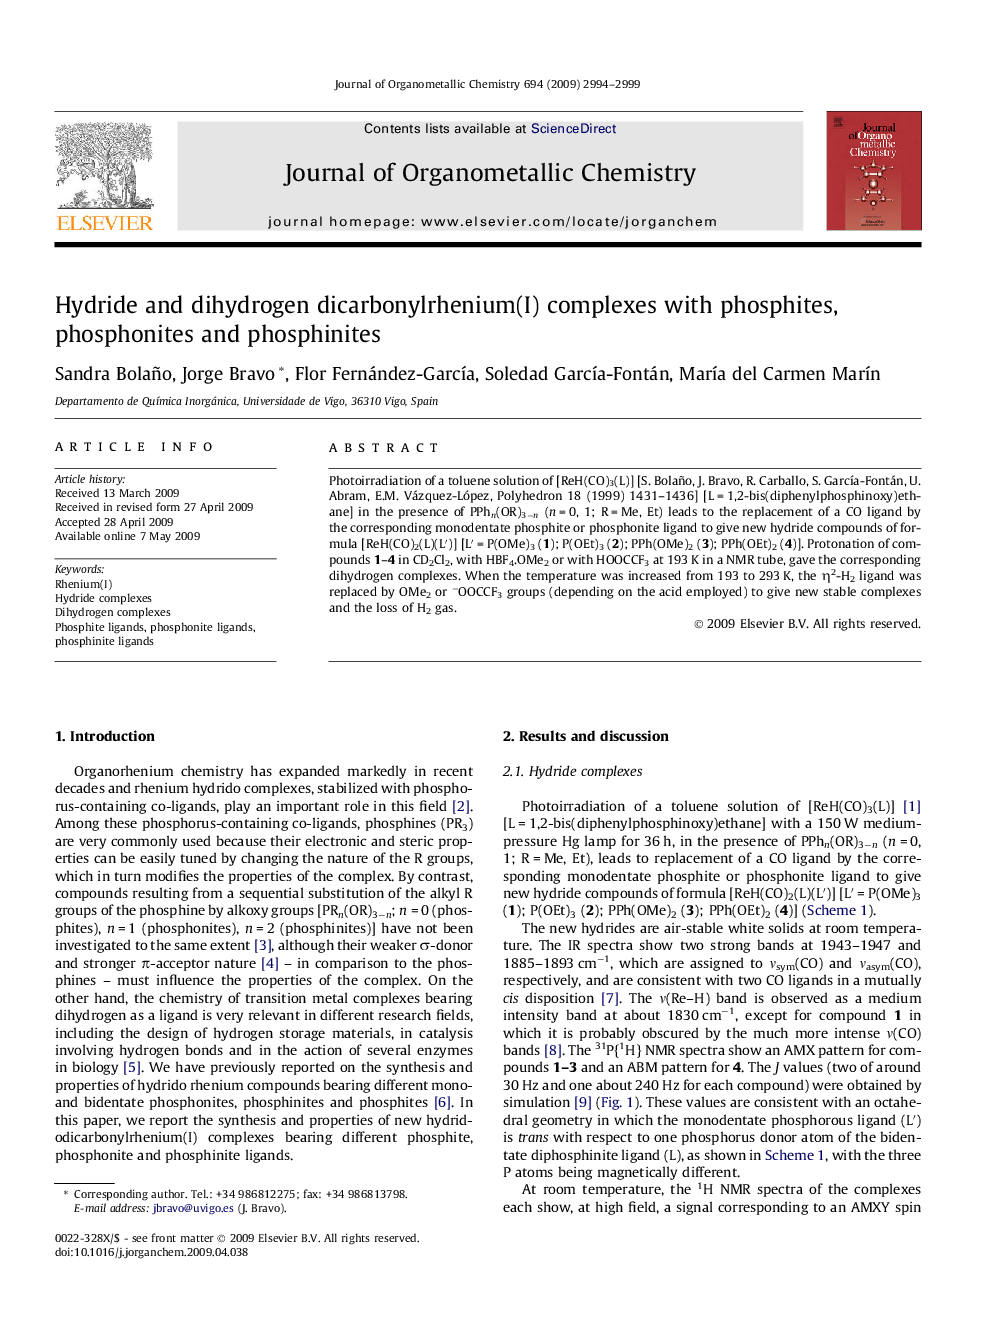 Hydride and dihydrogen dicarbonylrhenium(I) complexes with phosphites, phosphonites and phosphinites